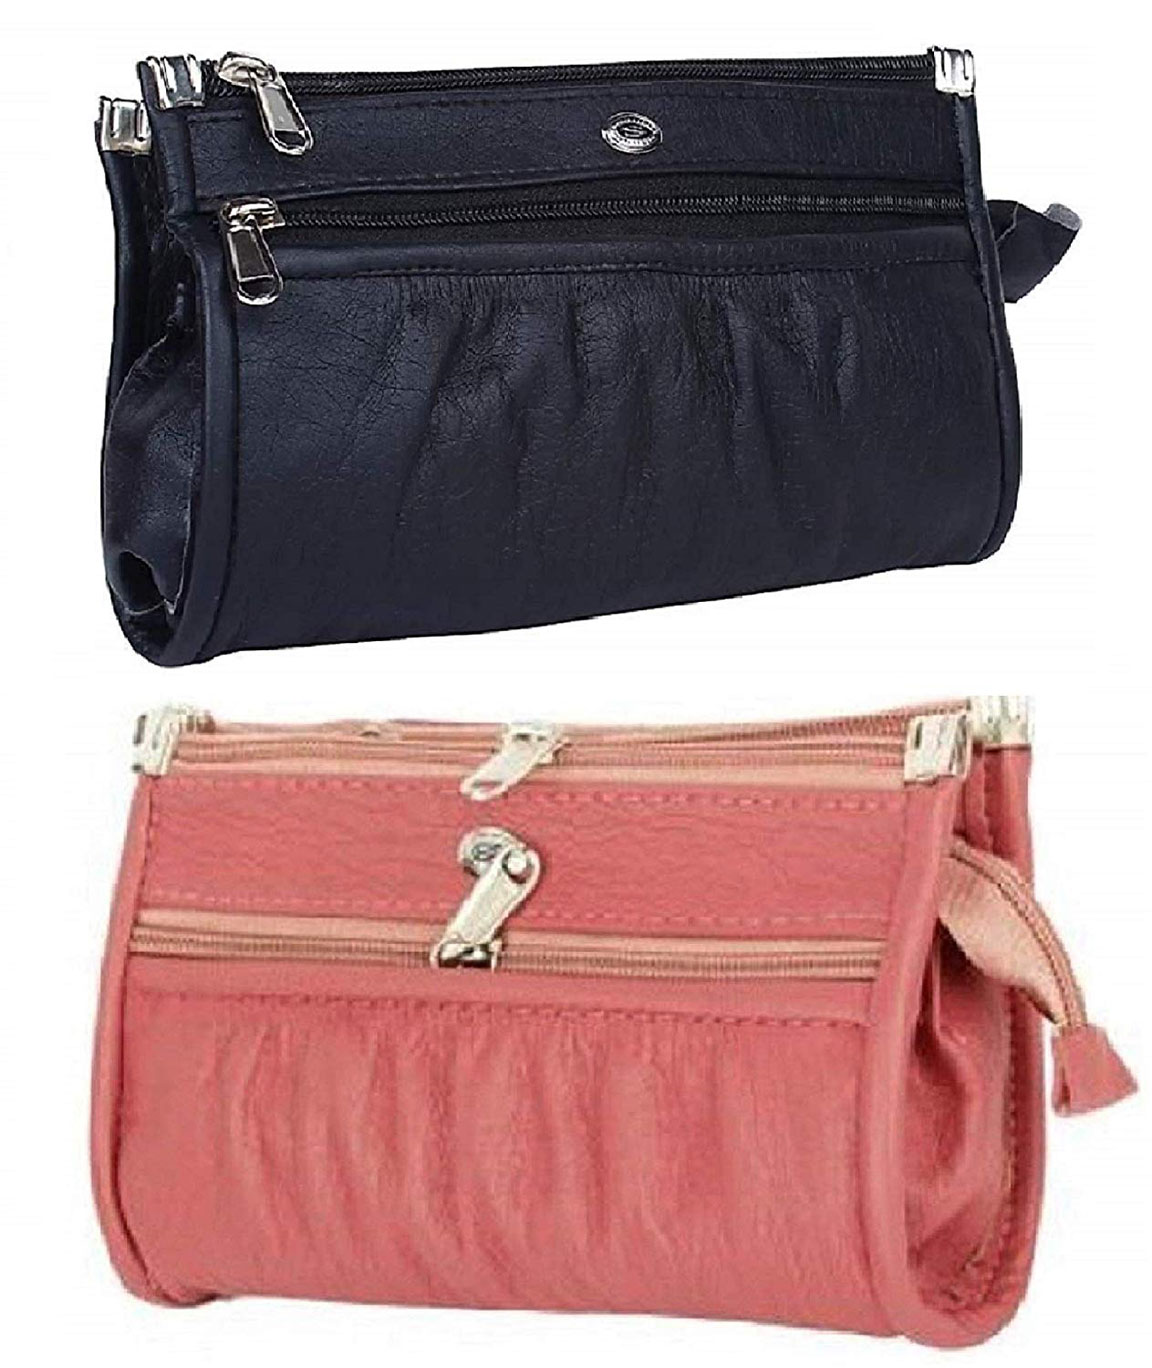 Handmade Clutch Vintage Bags, Handbags & Cases for sale | eBay